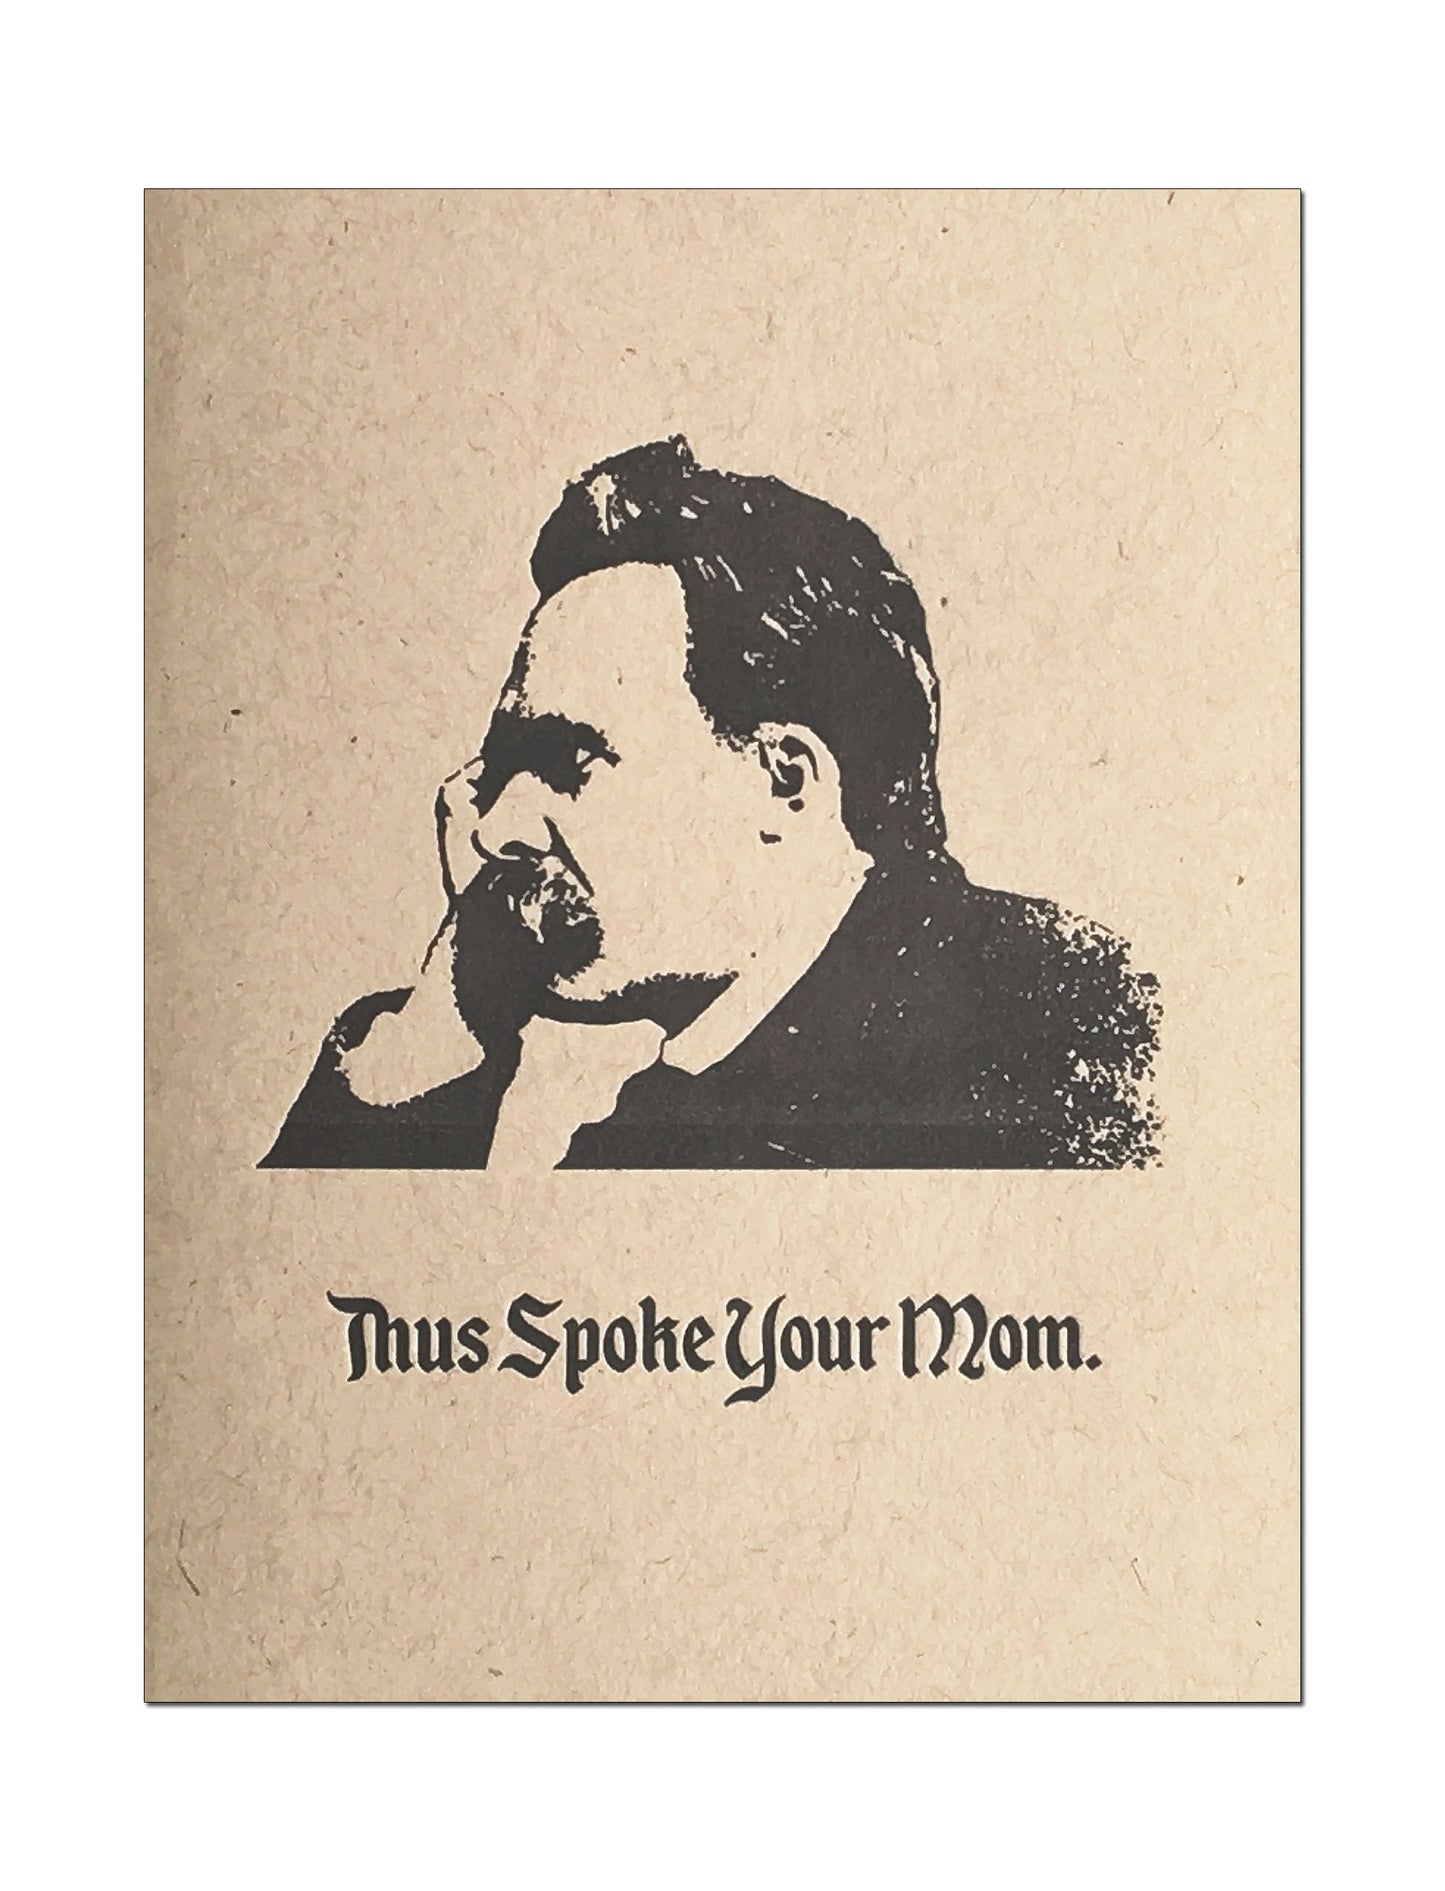 Thus Spoke Your Mom. Nietzsche Philosophy Greeting Card.